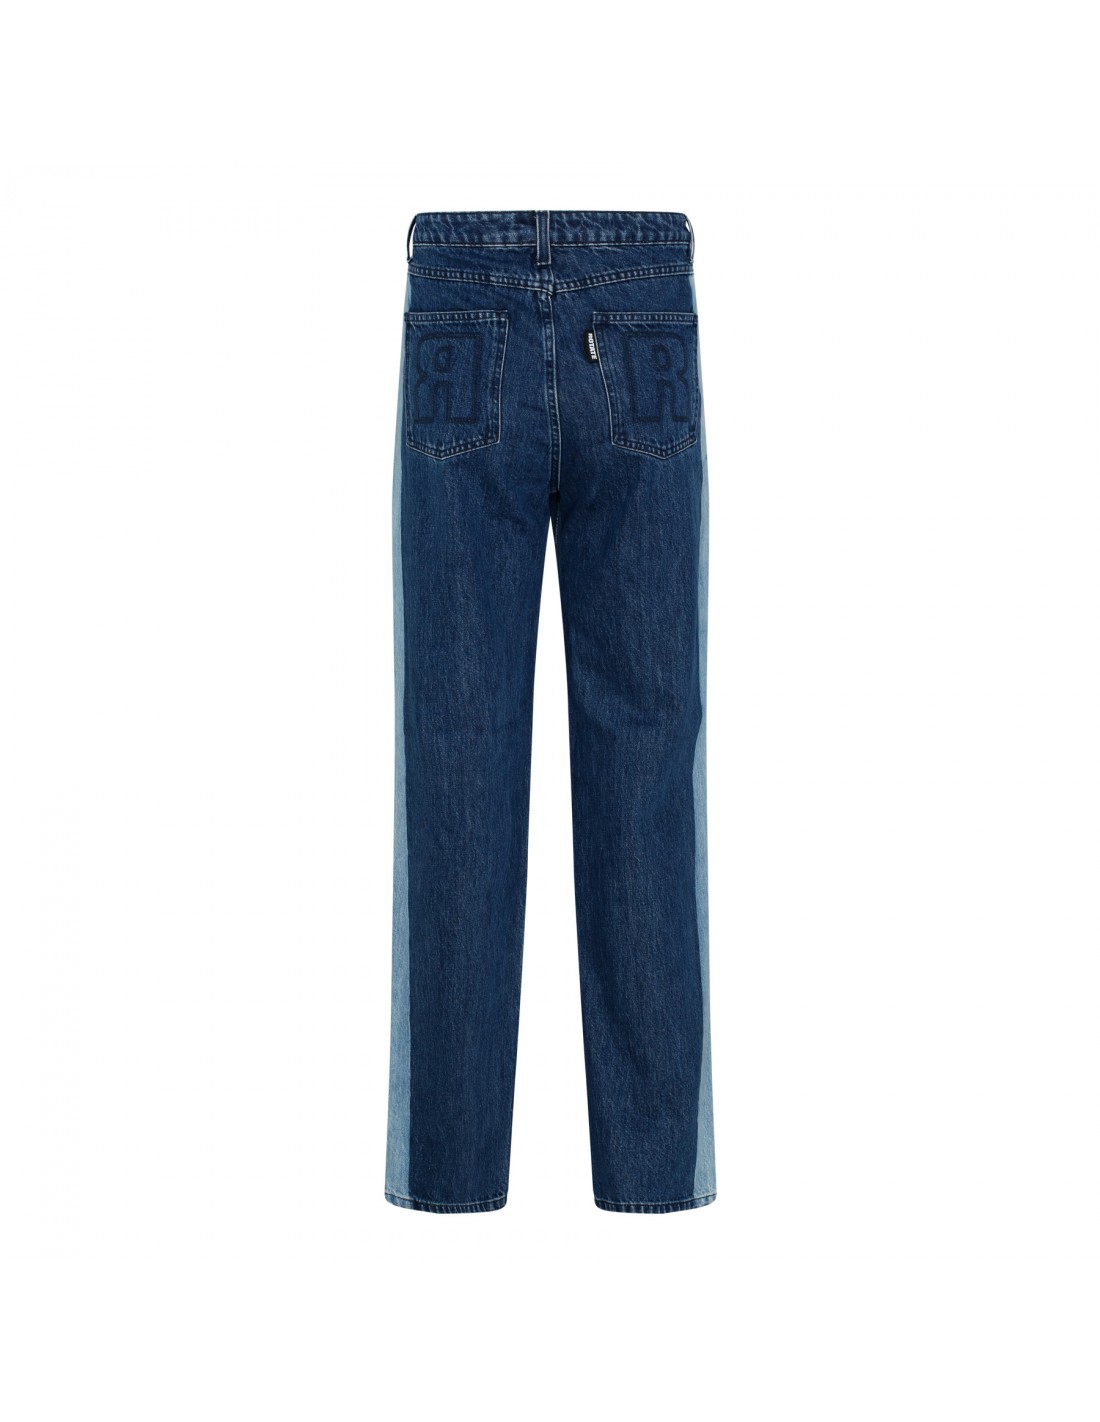 Medium blue denim jeans